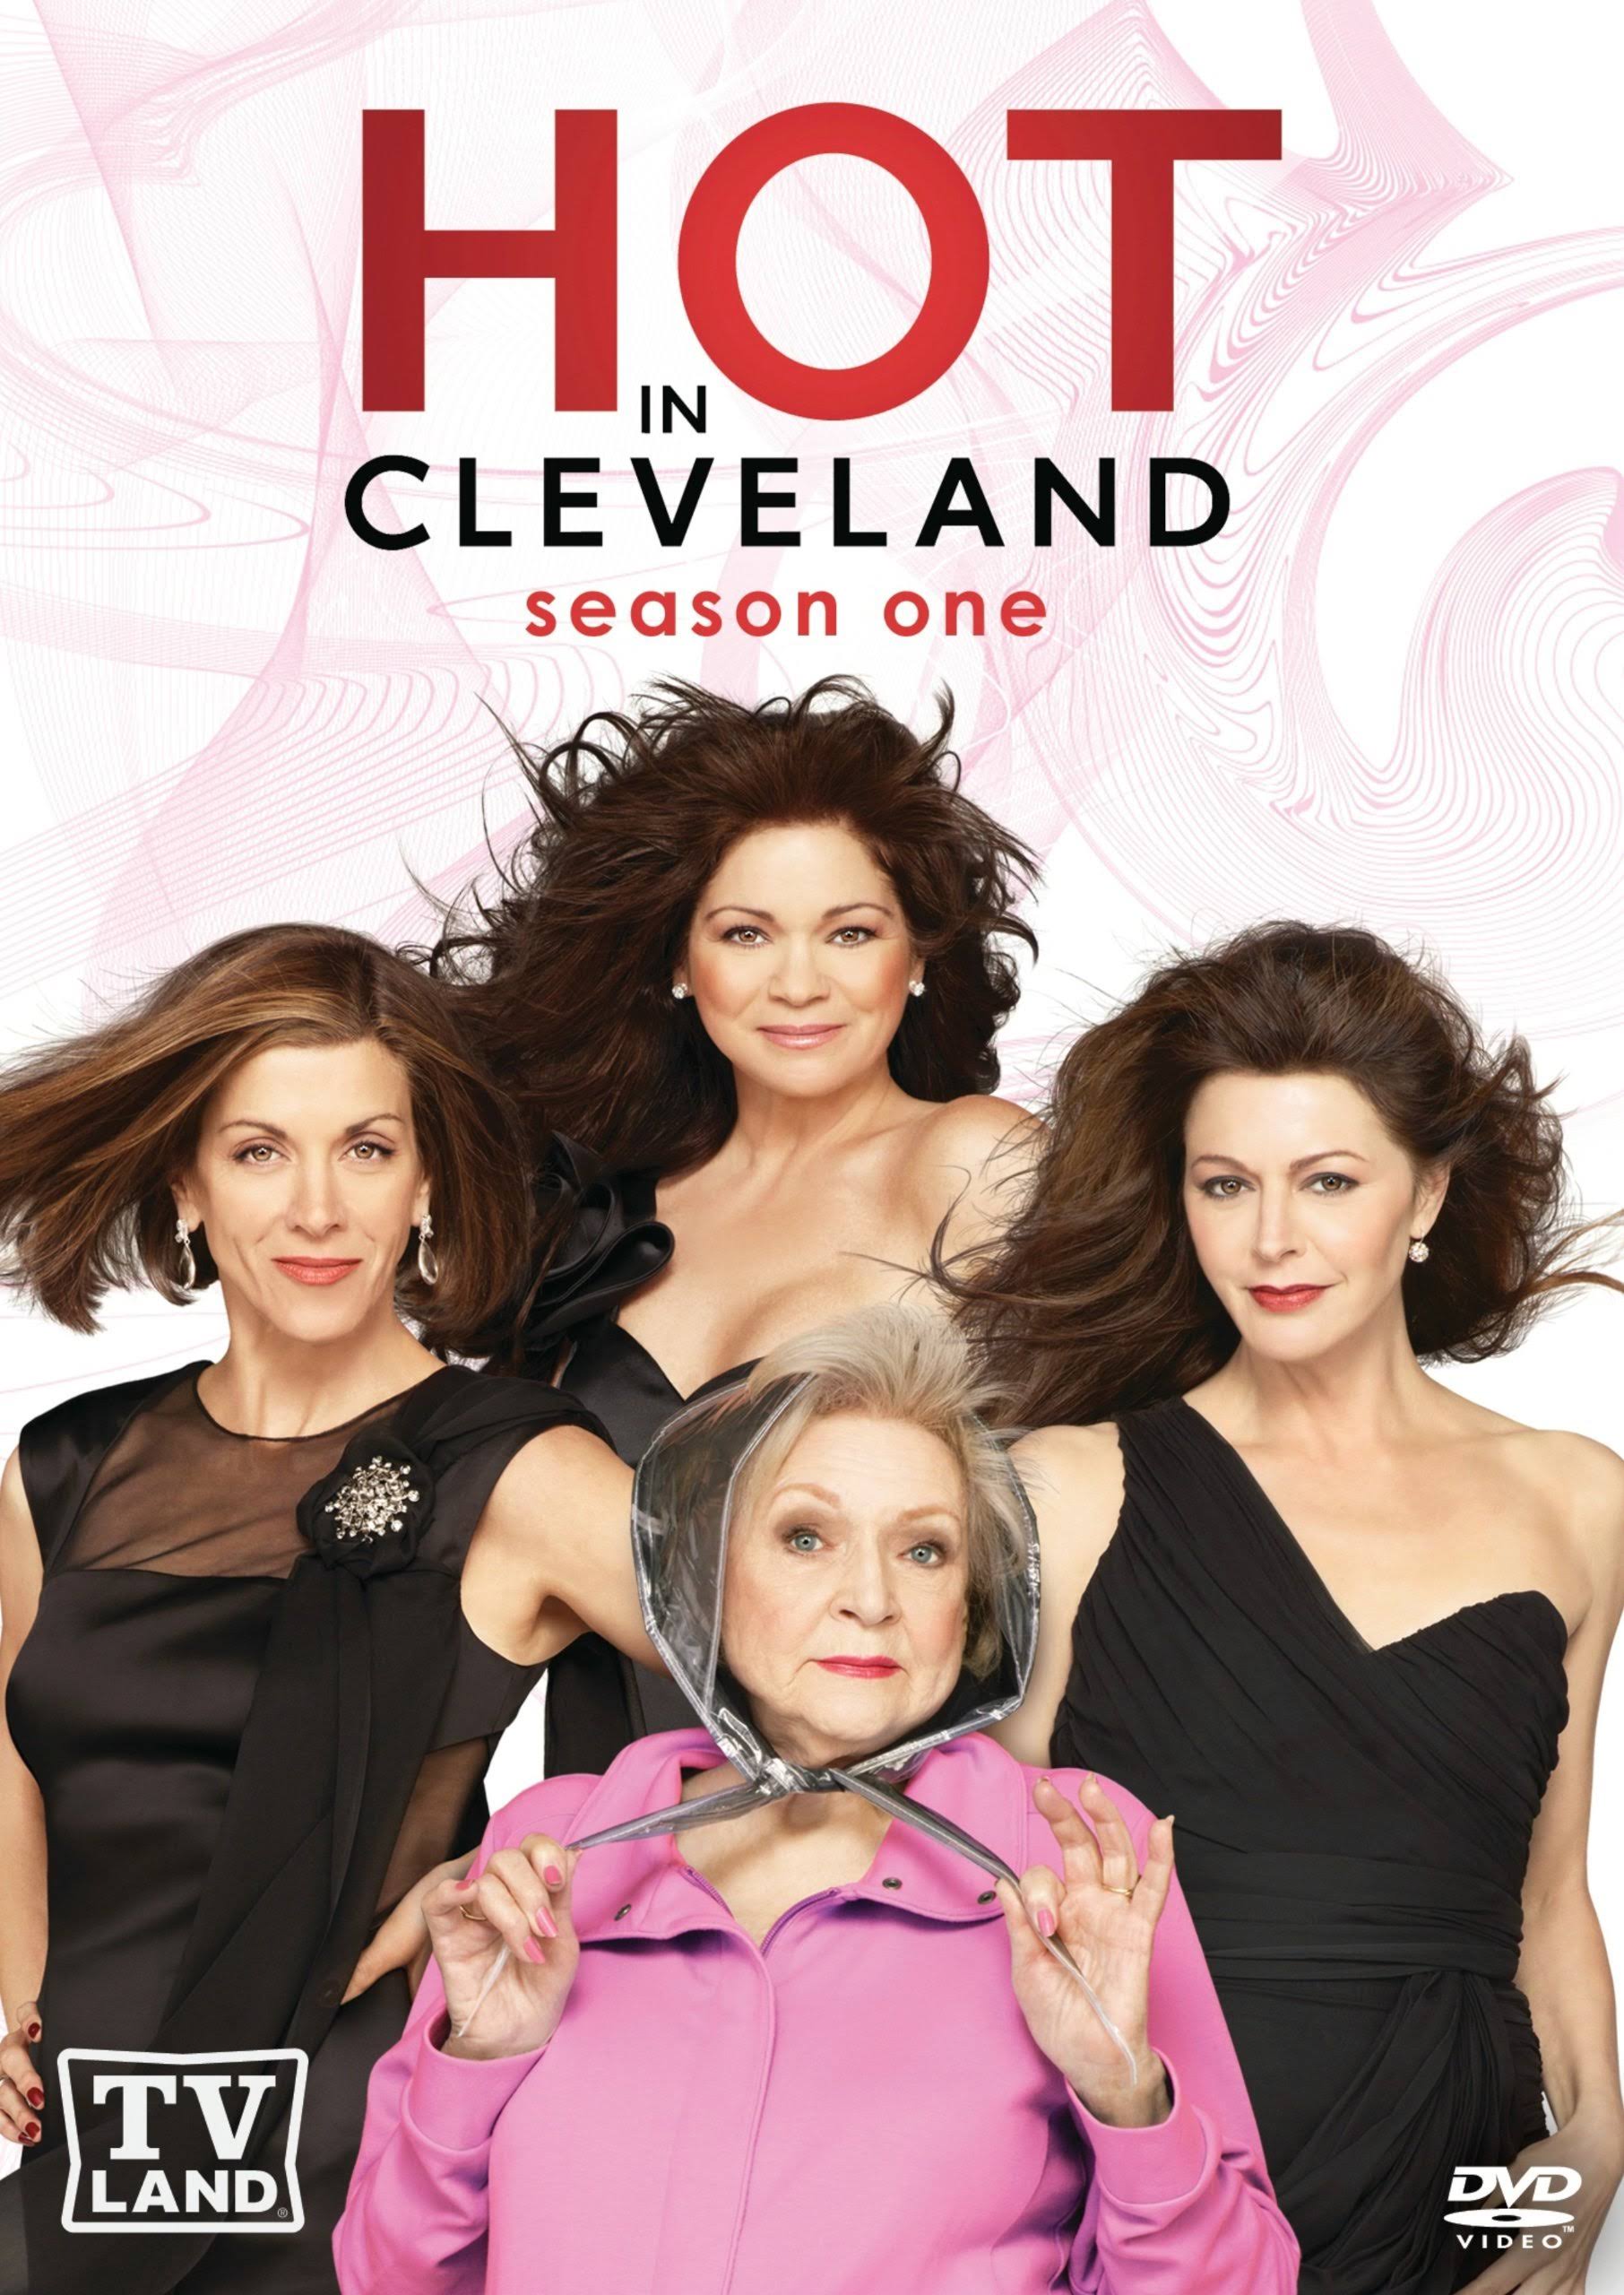 Hot In Cleveland: Season One DVD Set - 2 Discs